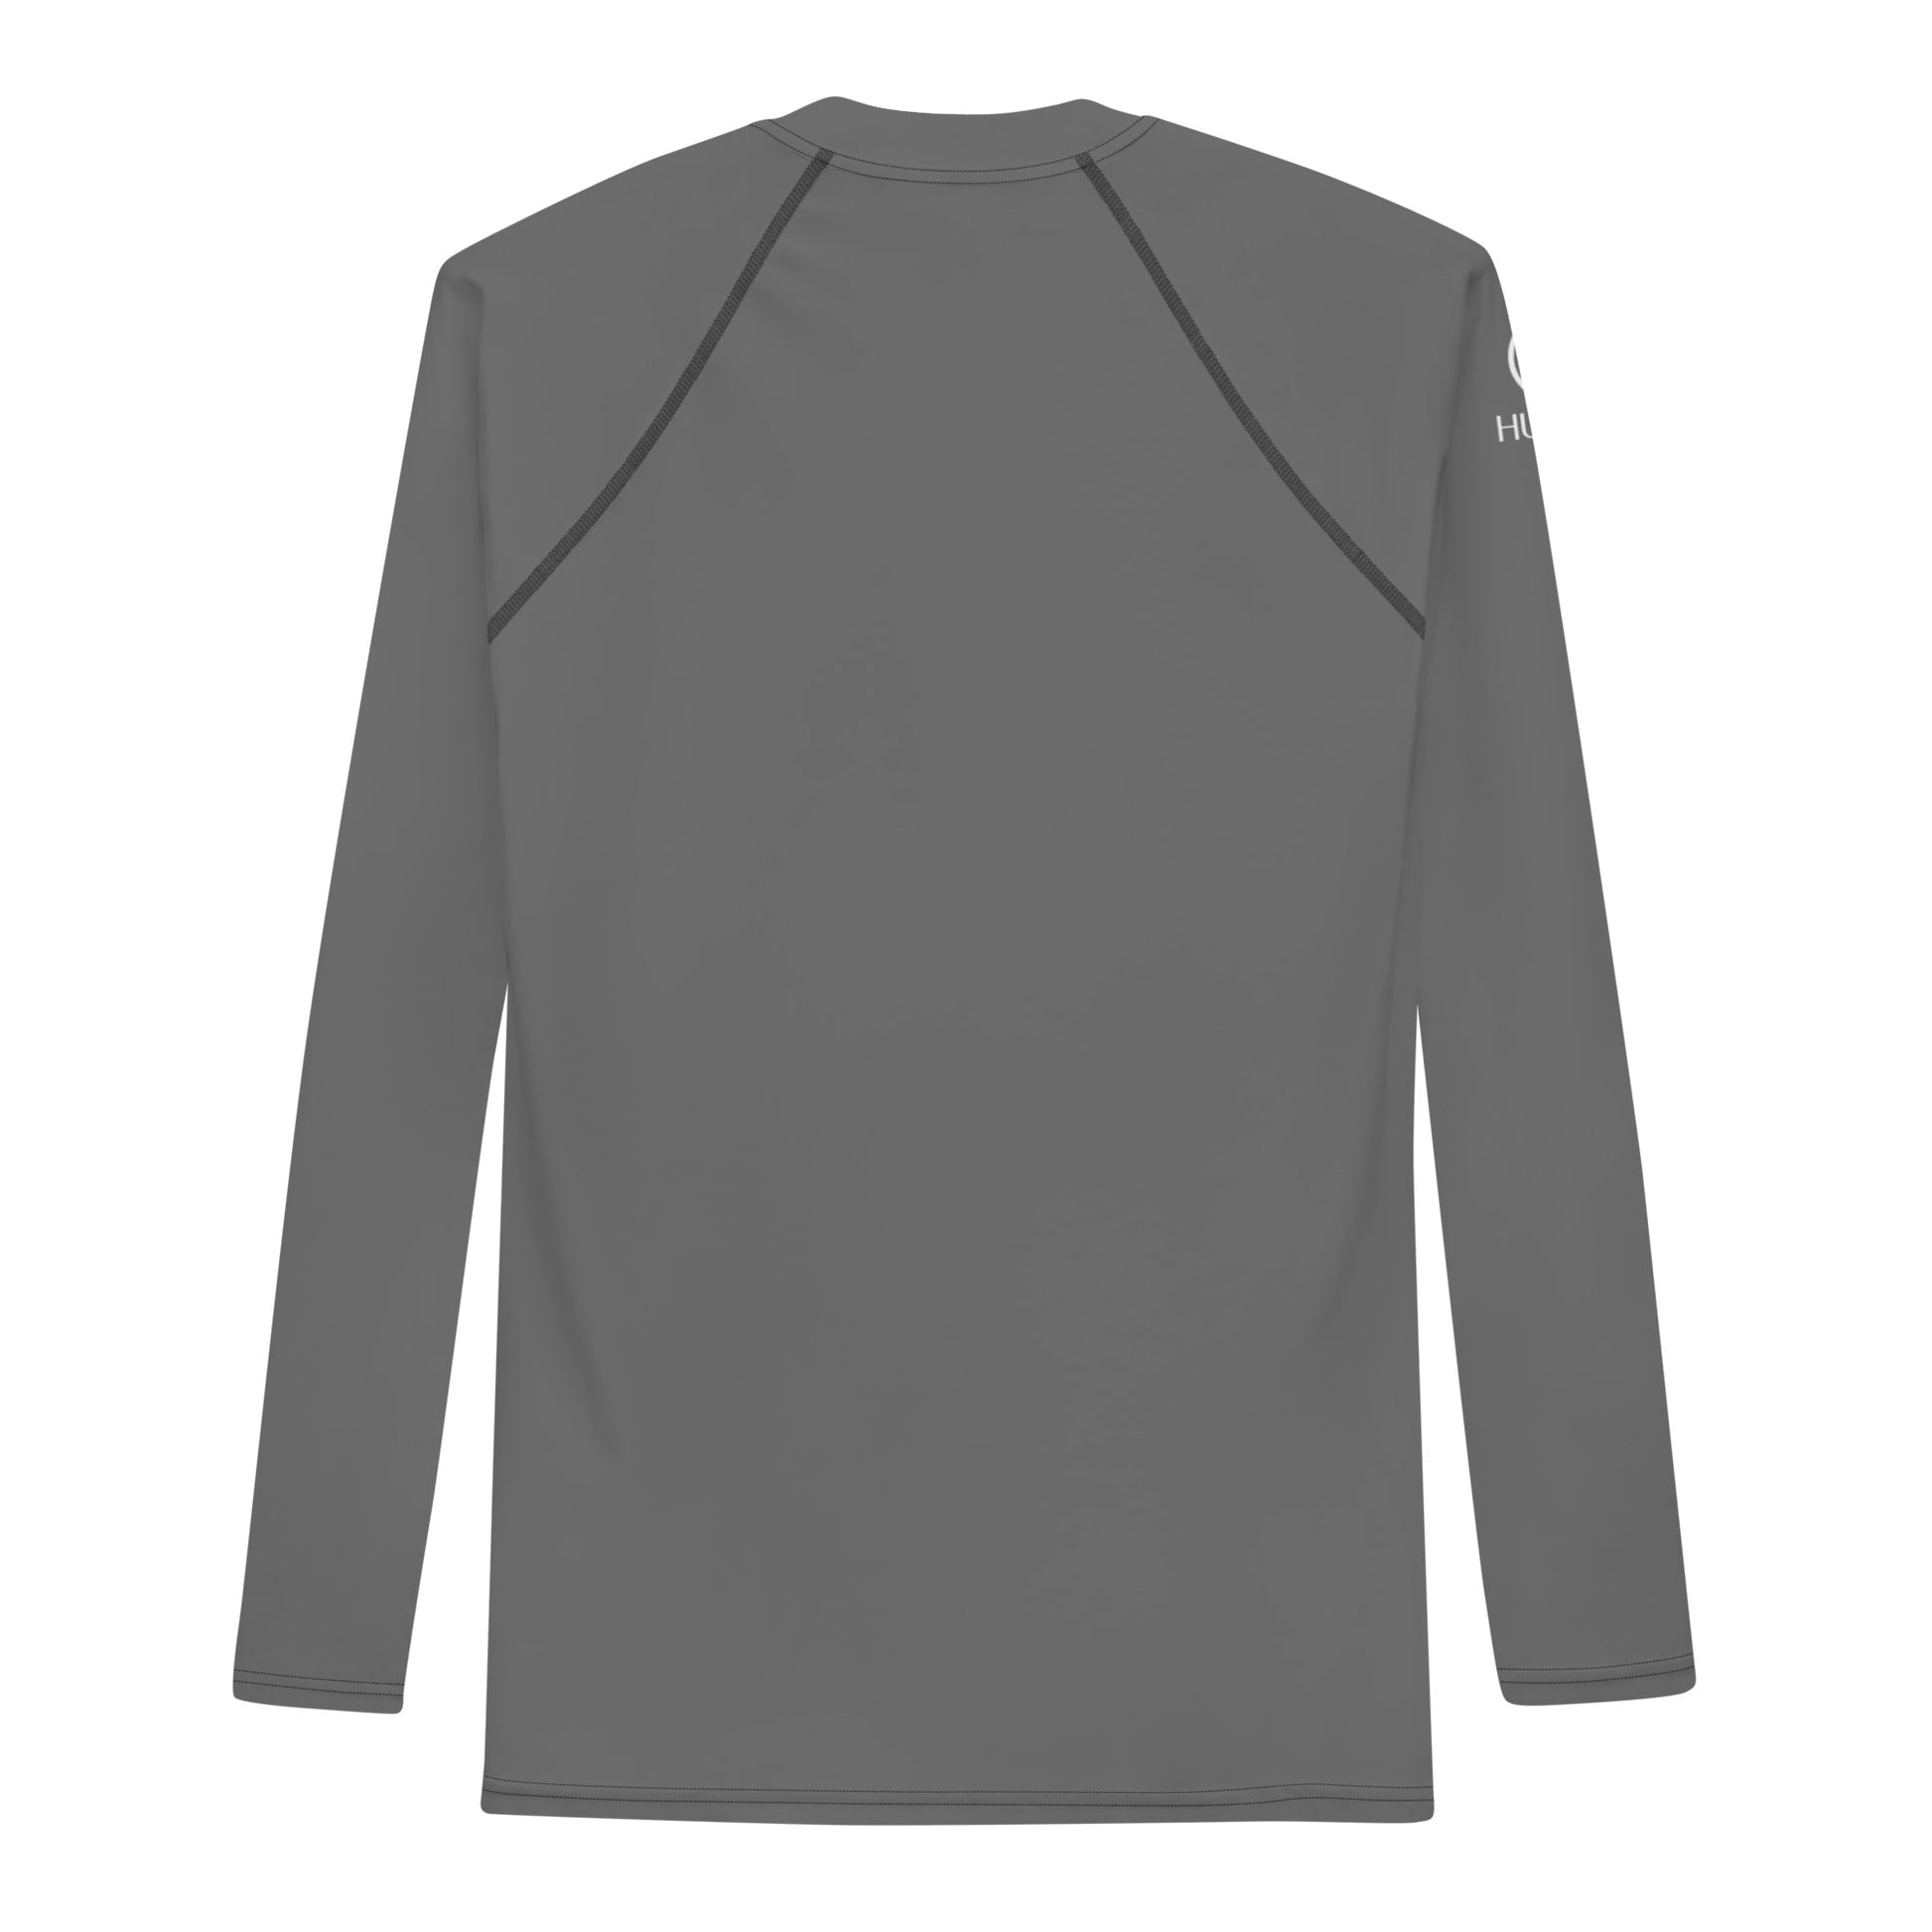 Humble Sportswear, men's color match long sleeve SPF50+ rash guards 